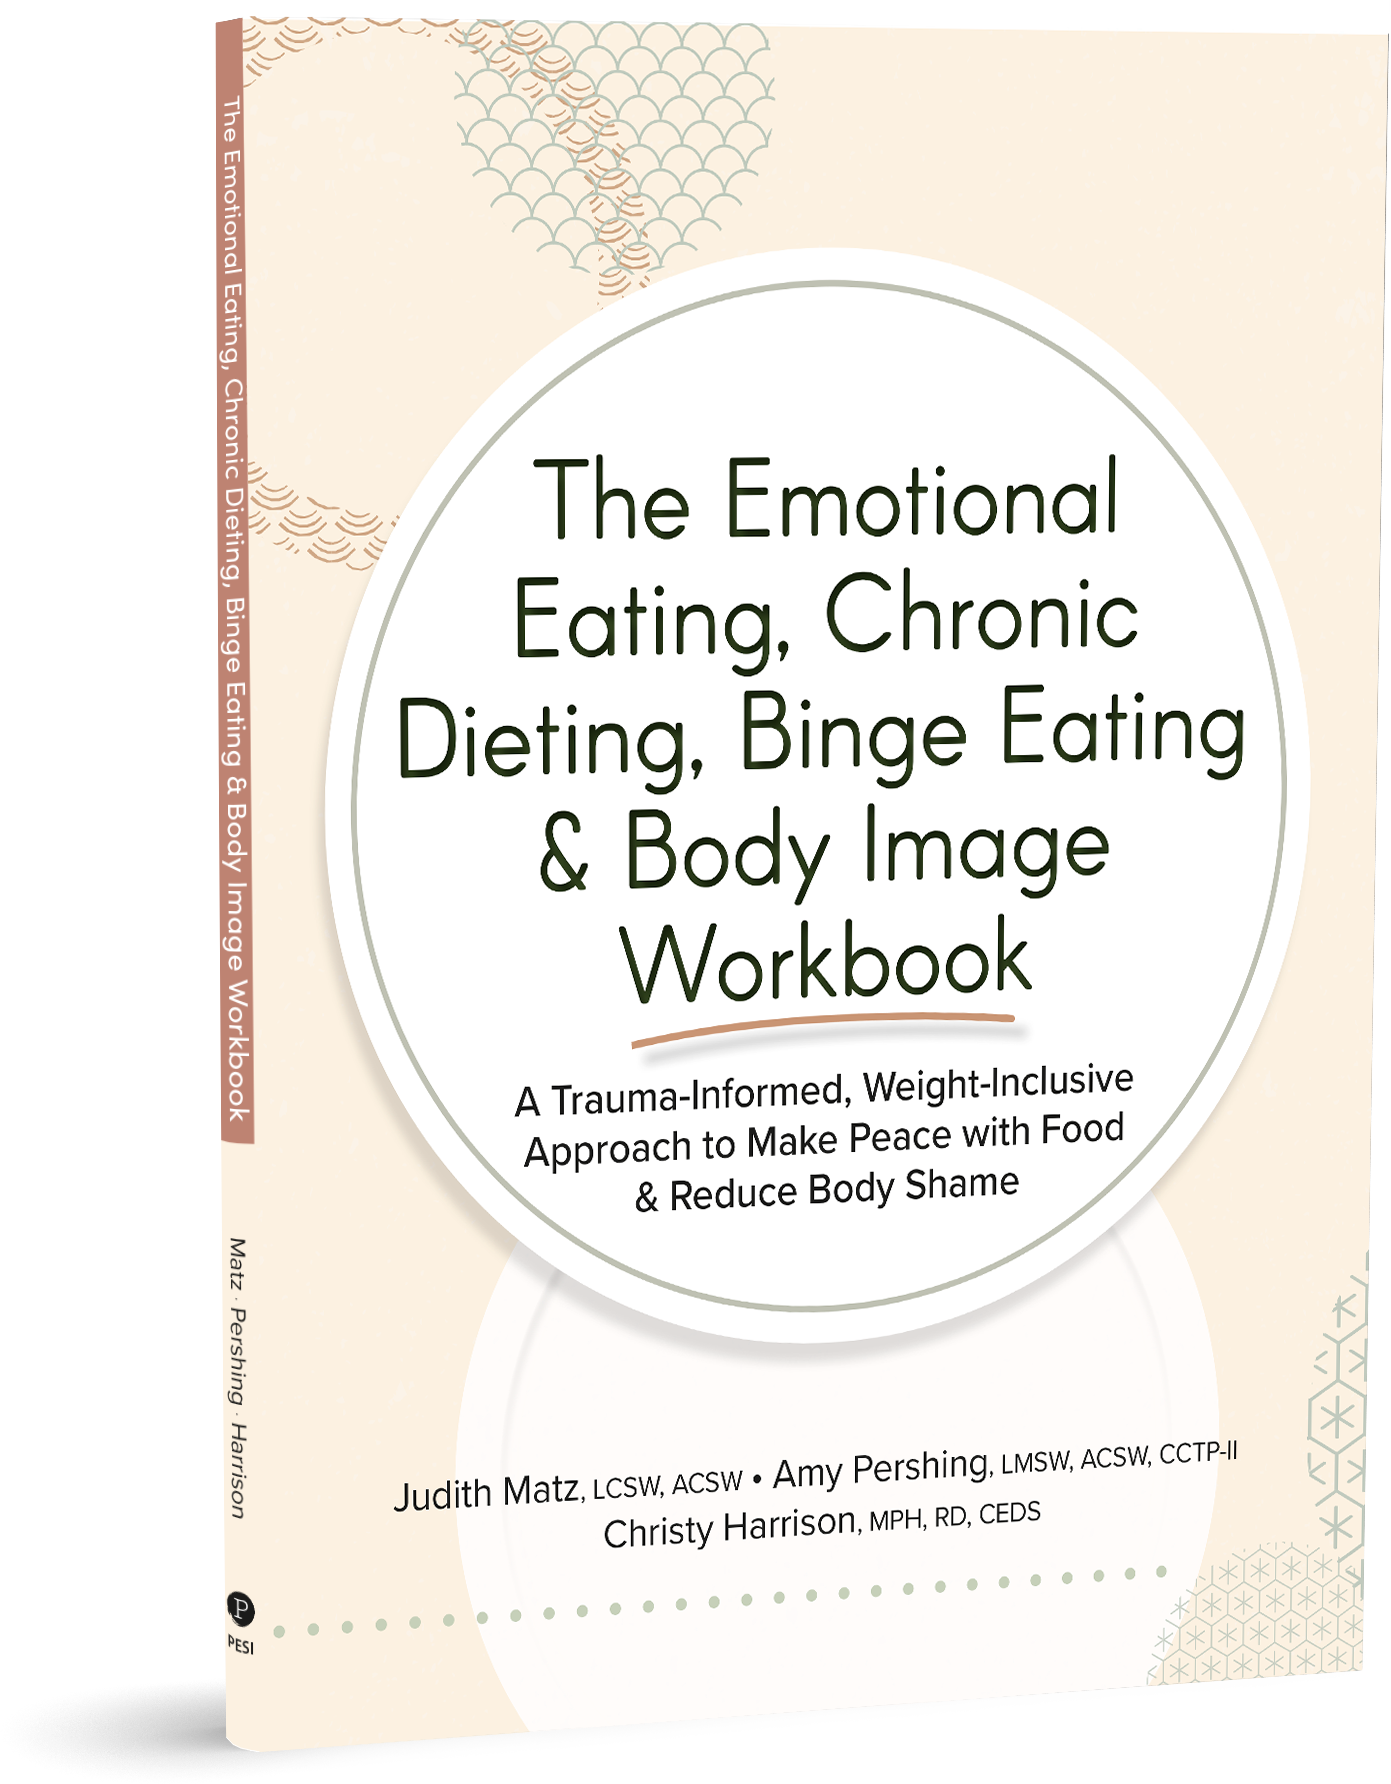 The Emotional Eating, Chronic Dieting, Binge Eating & Body Image Workbook